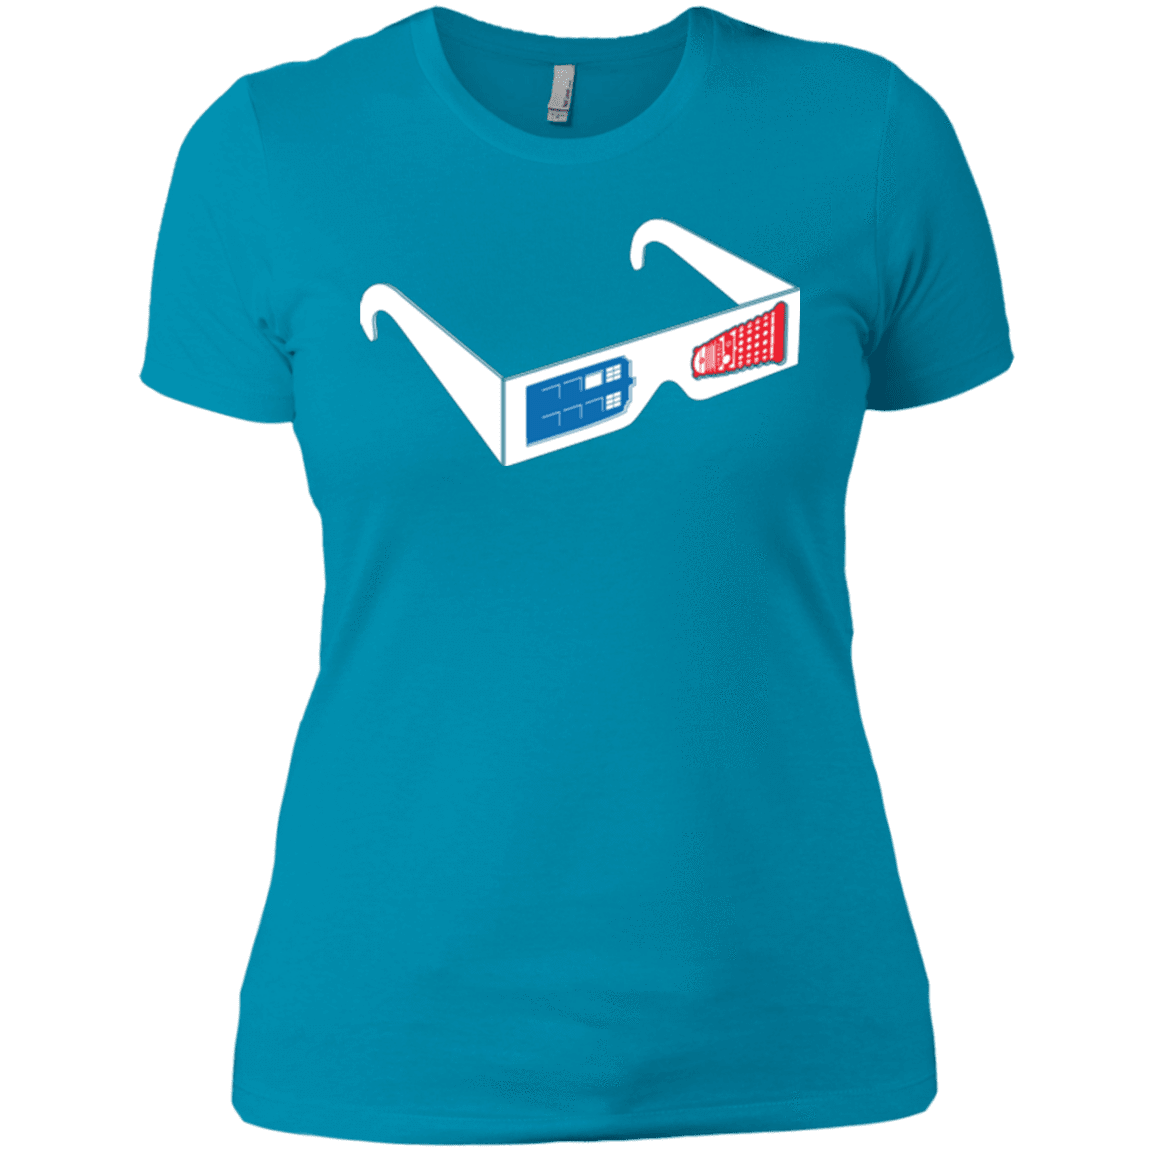 T-Shirts Turquoise / X-Small 3DW Women's Premium T-Shirt